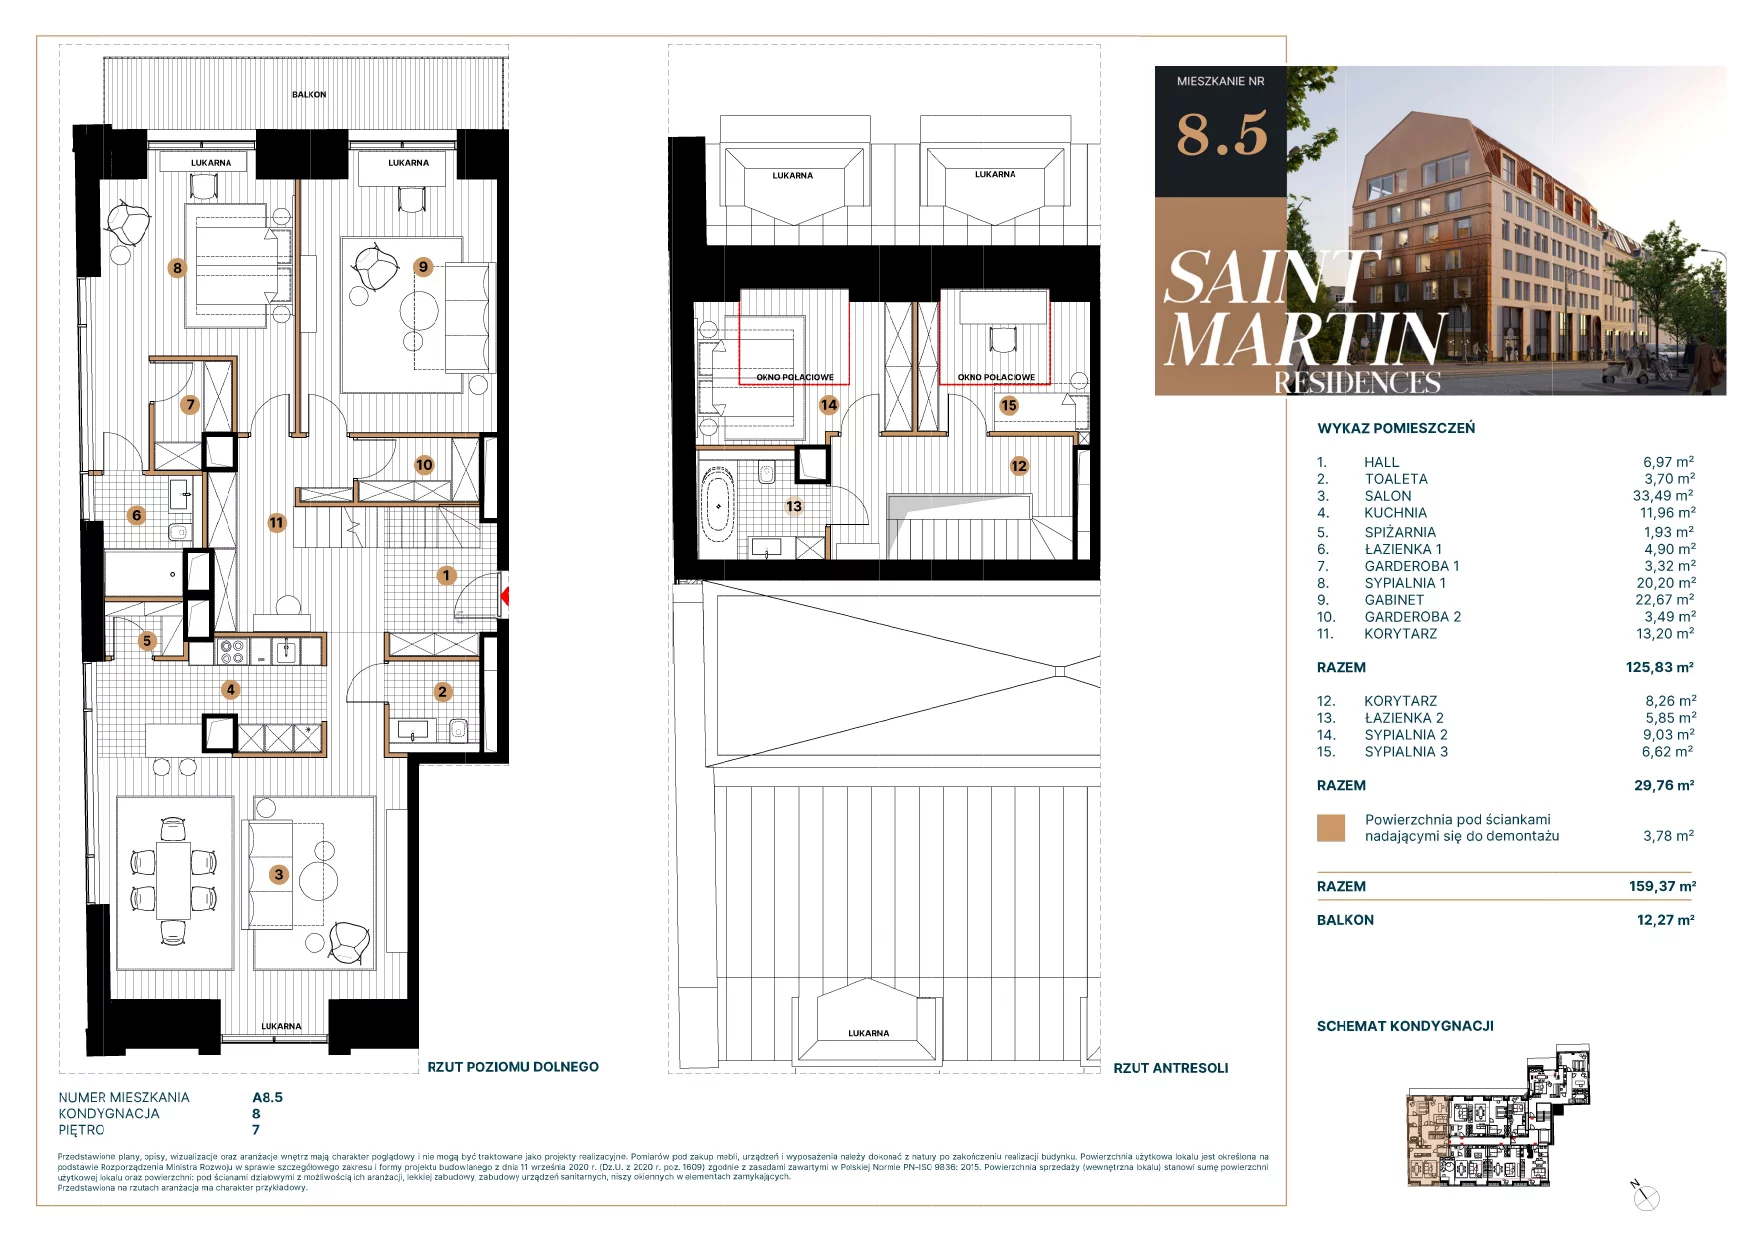 Apartament 155,73 m², piętro 7, oferta nr A8.5, Saint Martin Residences II, Poznań, Stare Miasto, Stare Miasto, ul. Podgórna 7